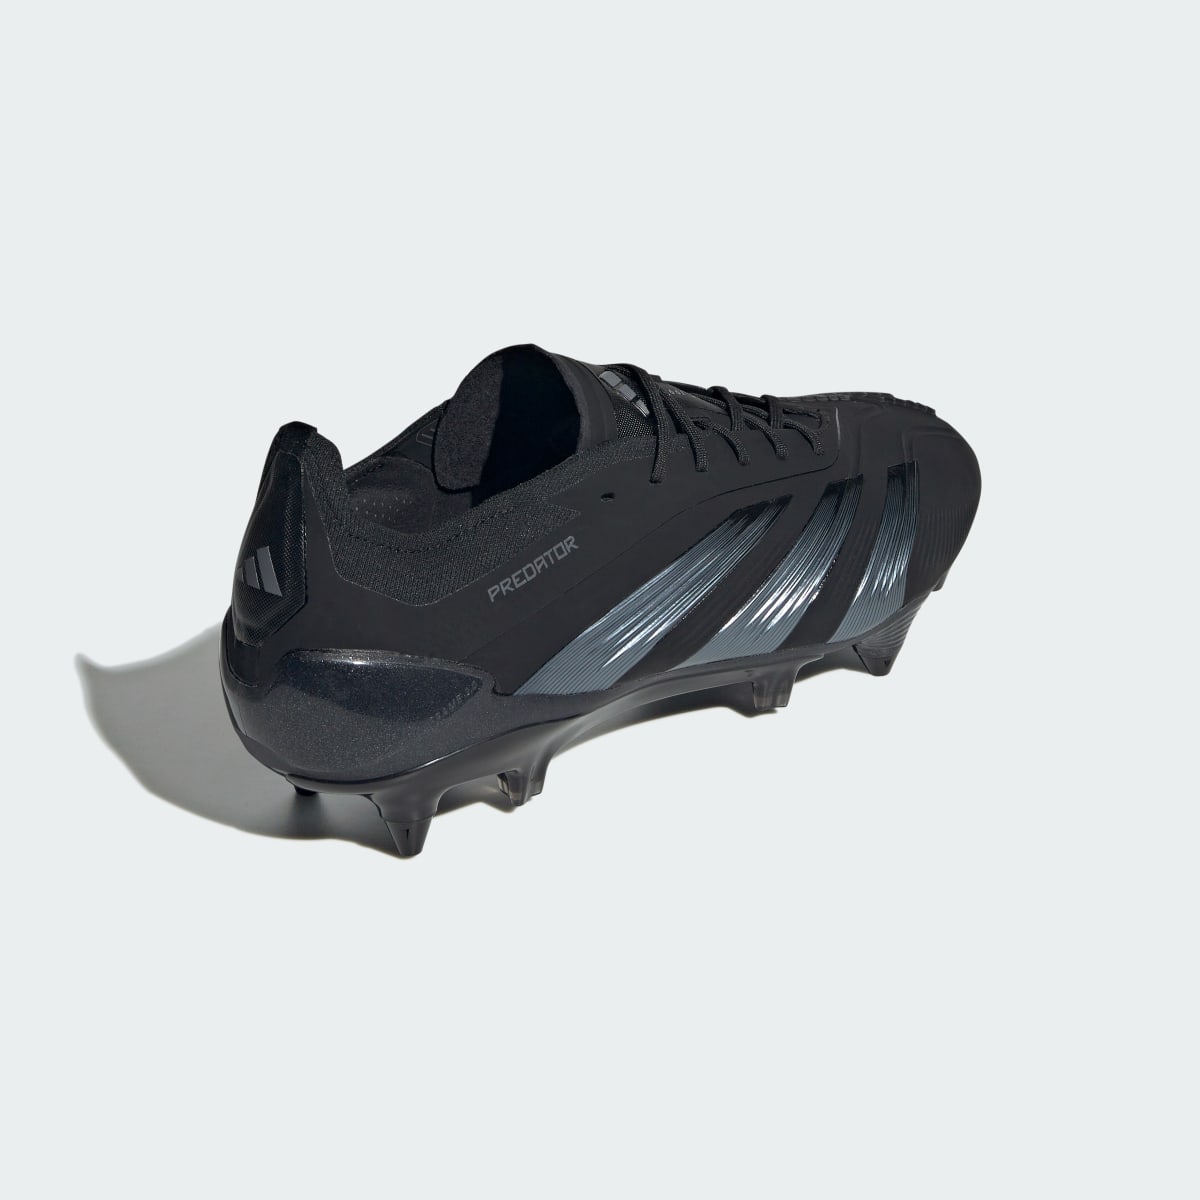 Adidas Predator Elite Soft Ground Football Boots. 7